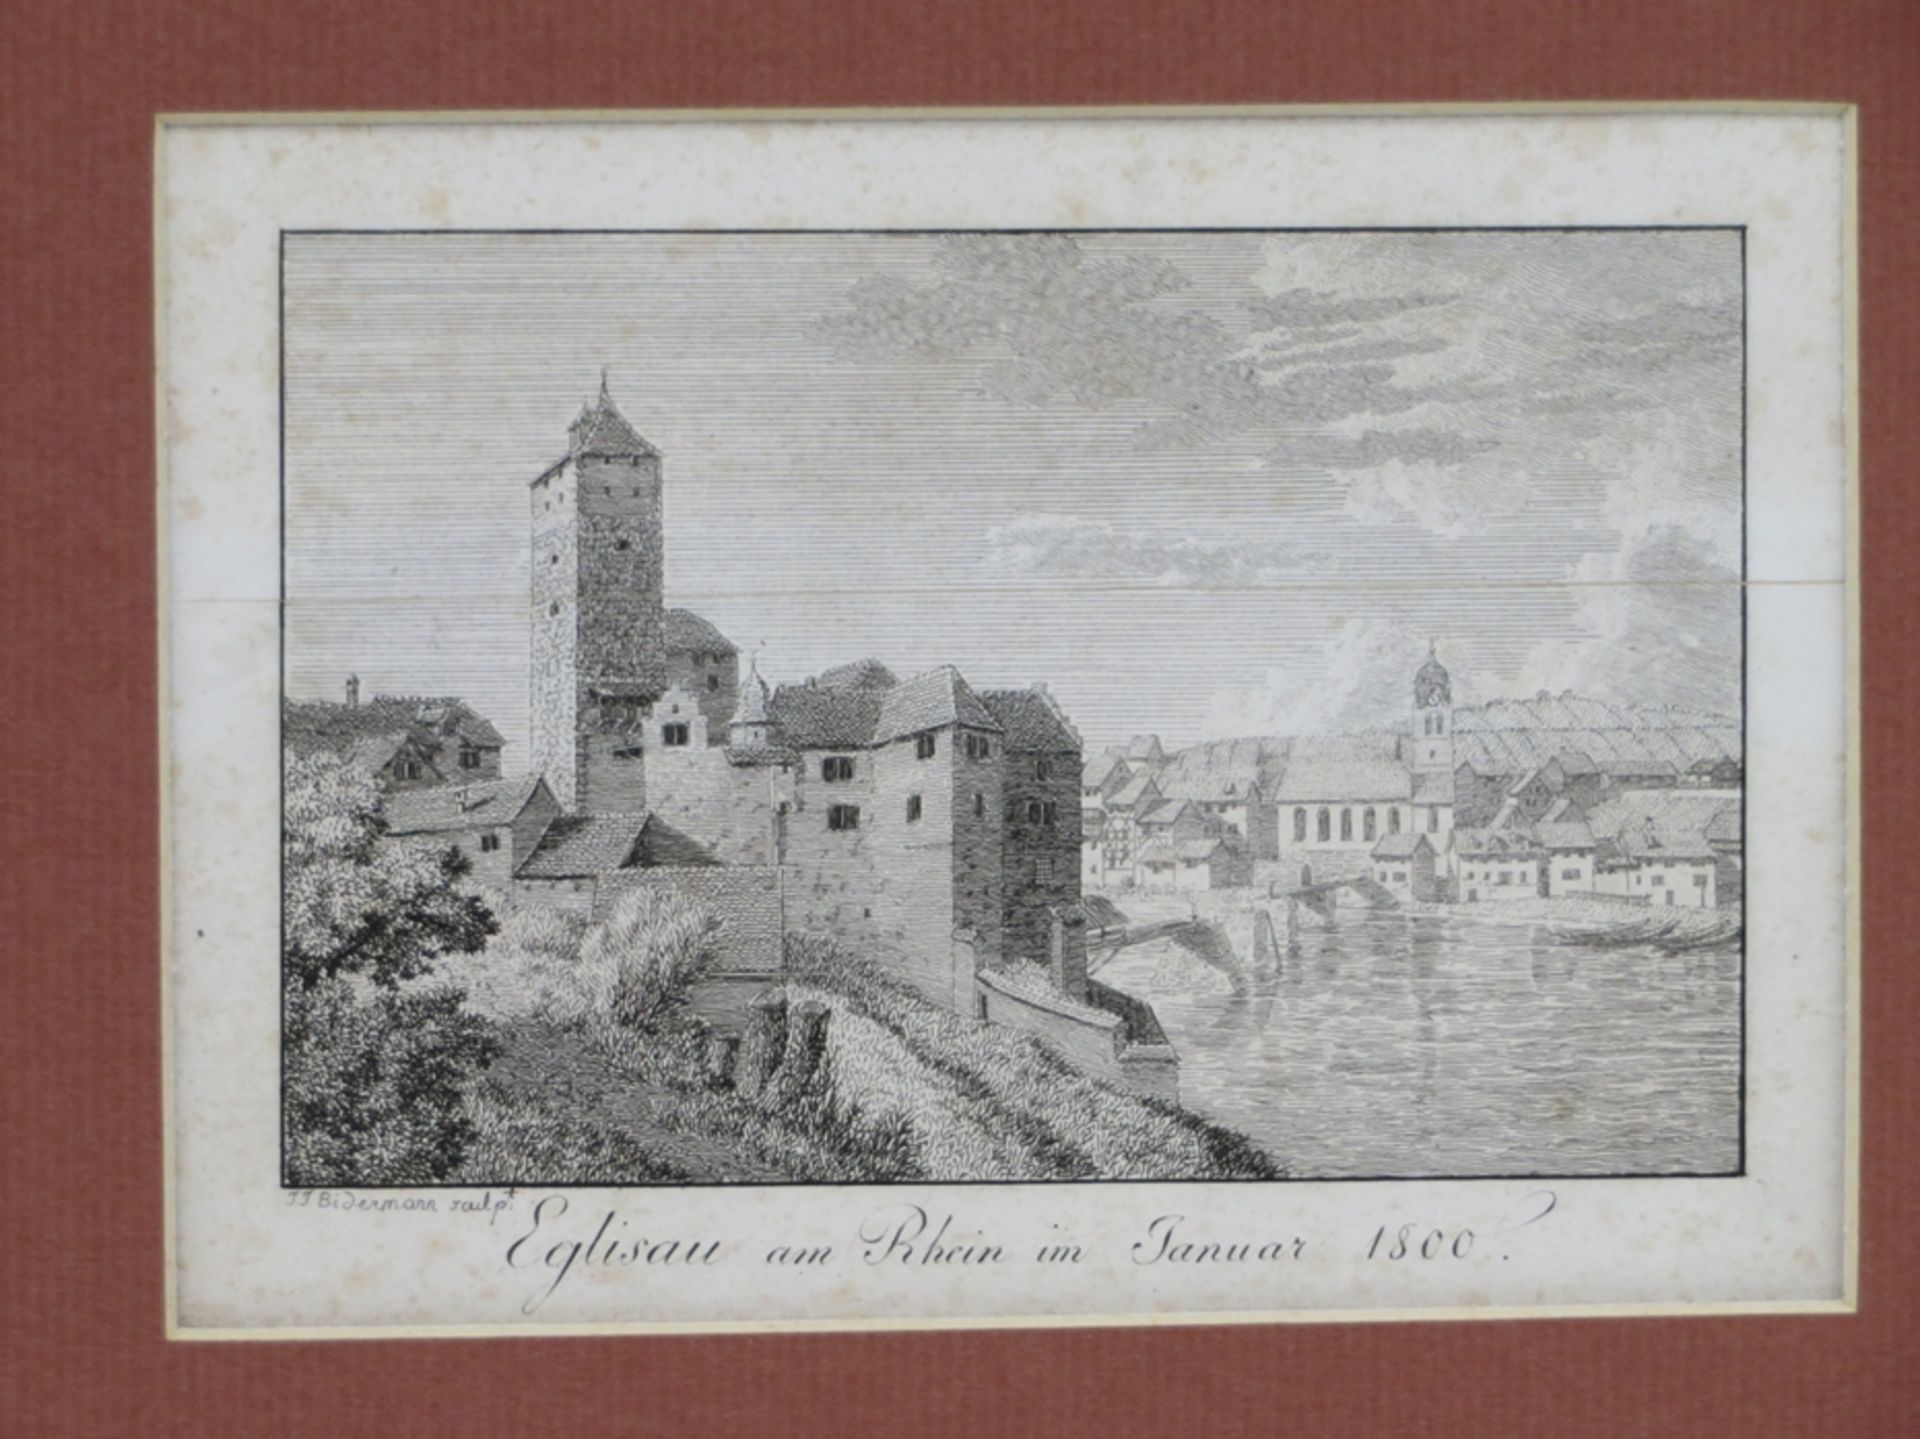 Biedermann, J.J., "Eglisau am Rhein im Januar 1800", Radierung, Blatt mittig geschnitten, 9 x 13,3 